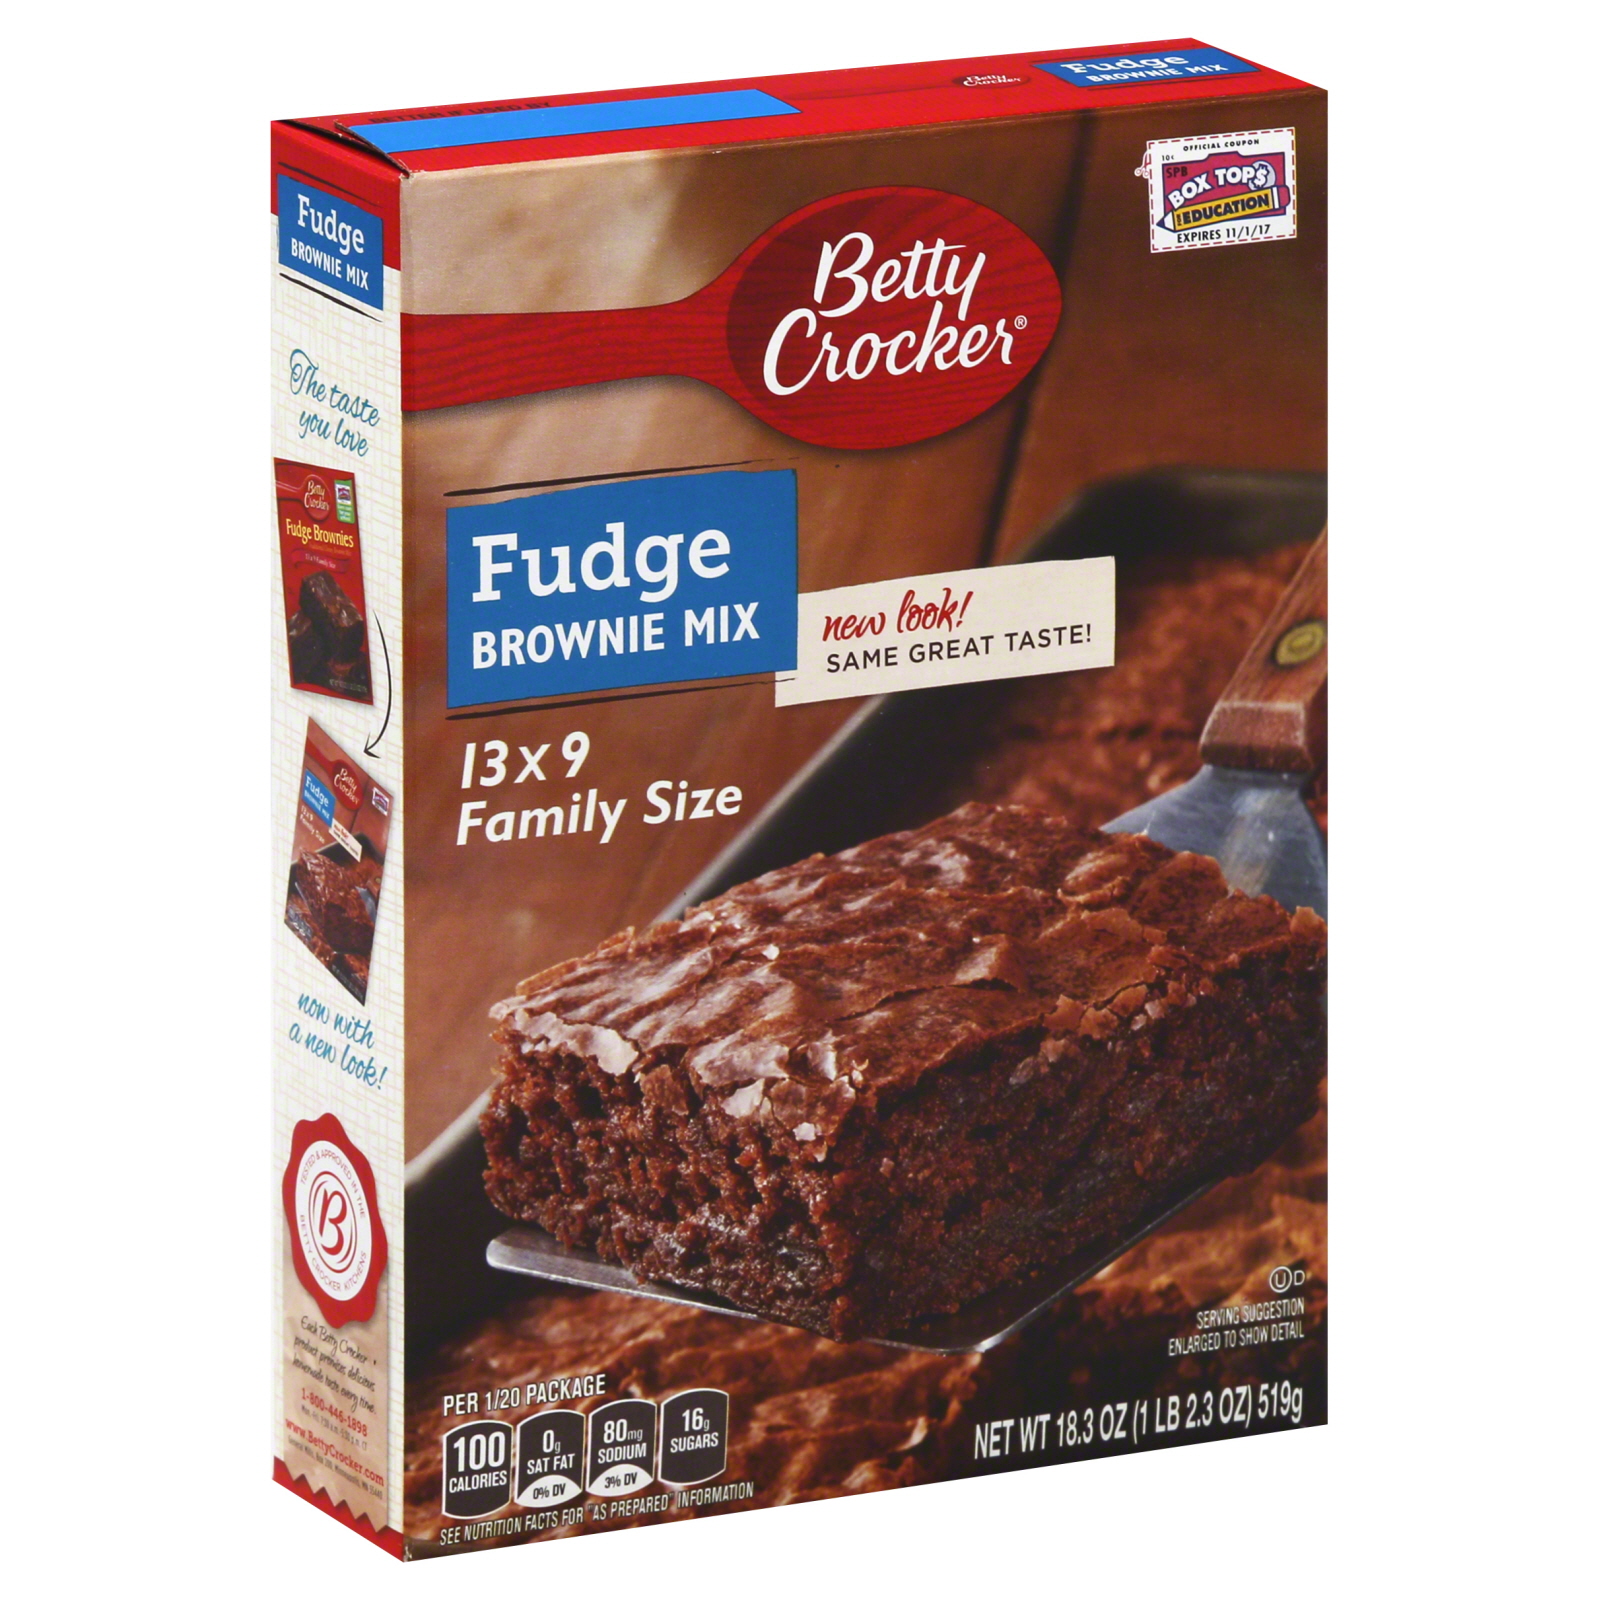 Betty Crocker Fudge Brownies, 13 x 9 Family Size, 18.3 oz (1 lb 2.3 oz) 519 g